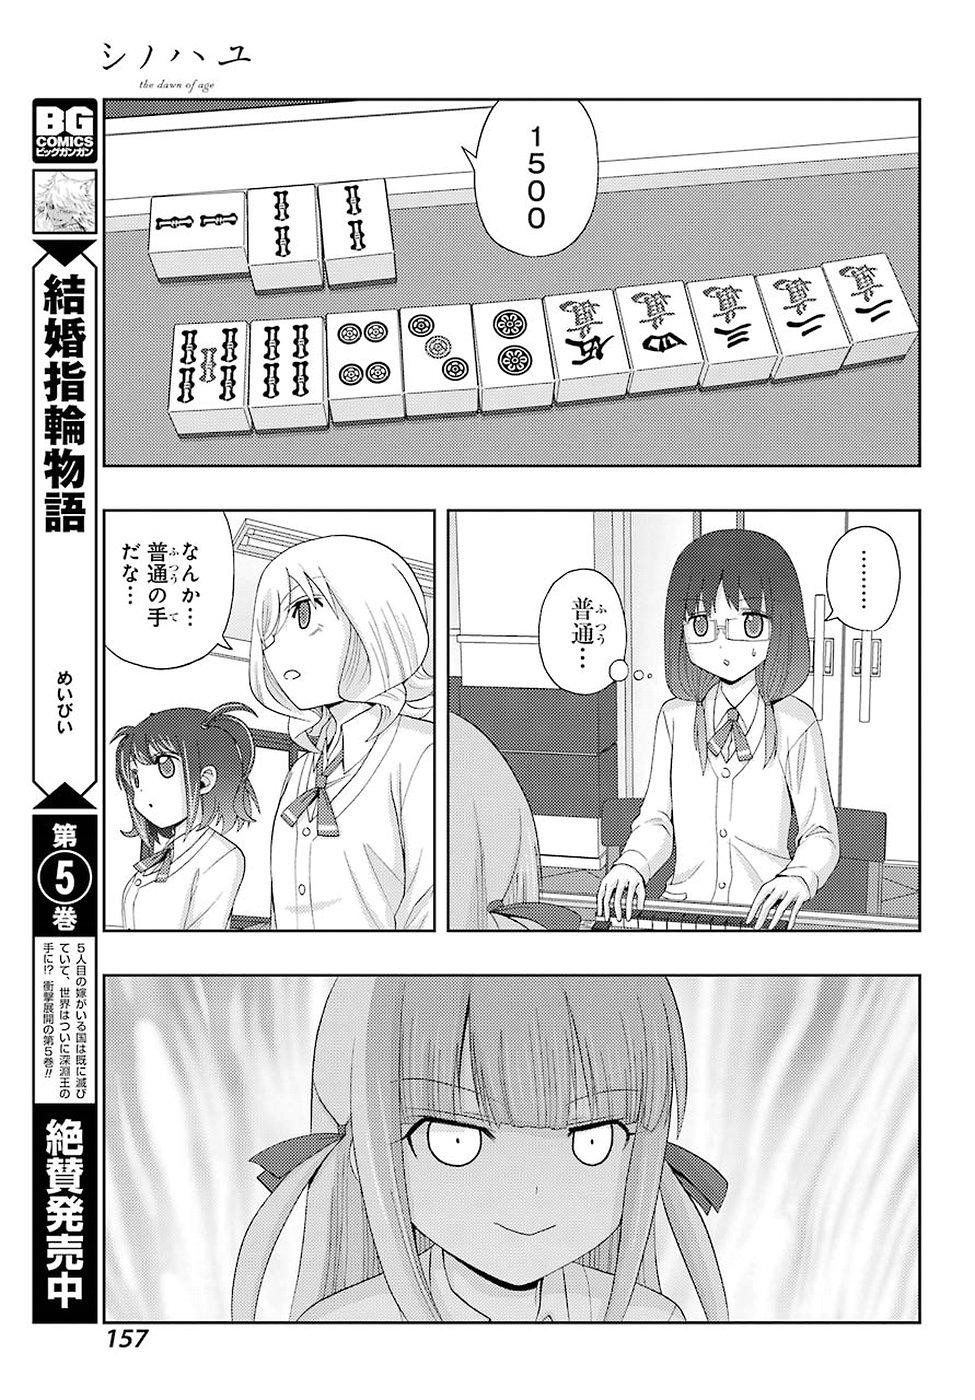 Shinohayu - The Dawn of Age Manga - Chapter 051 - Page 17